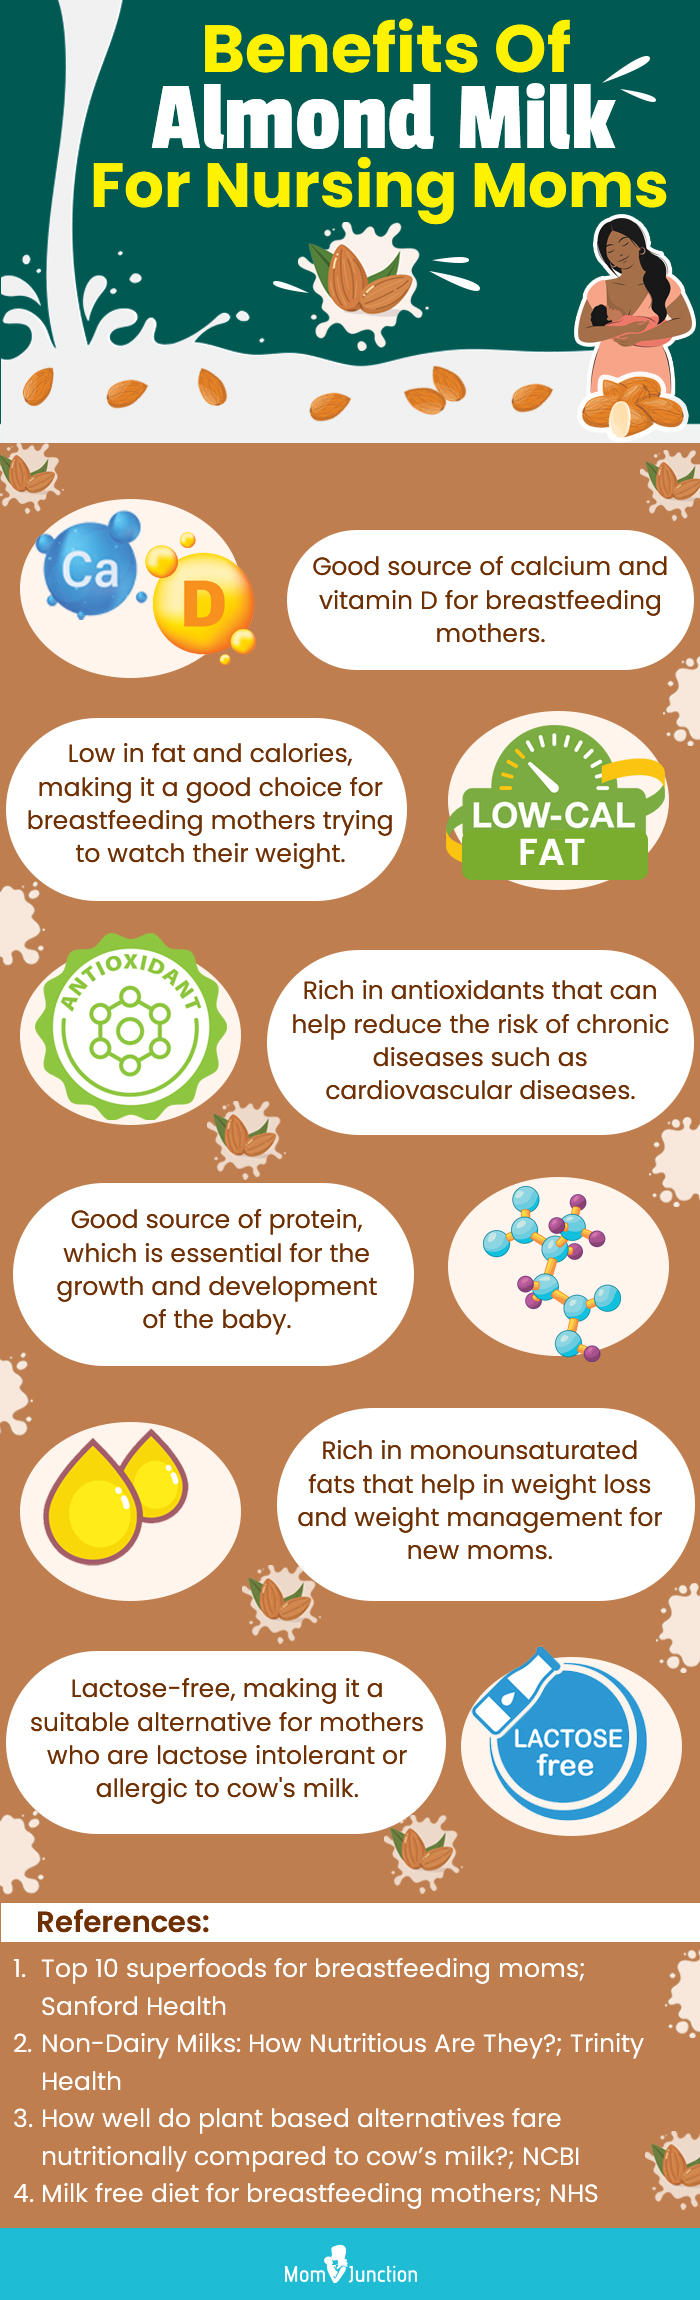 benefits of almond milk for nursing moms (infographic)